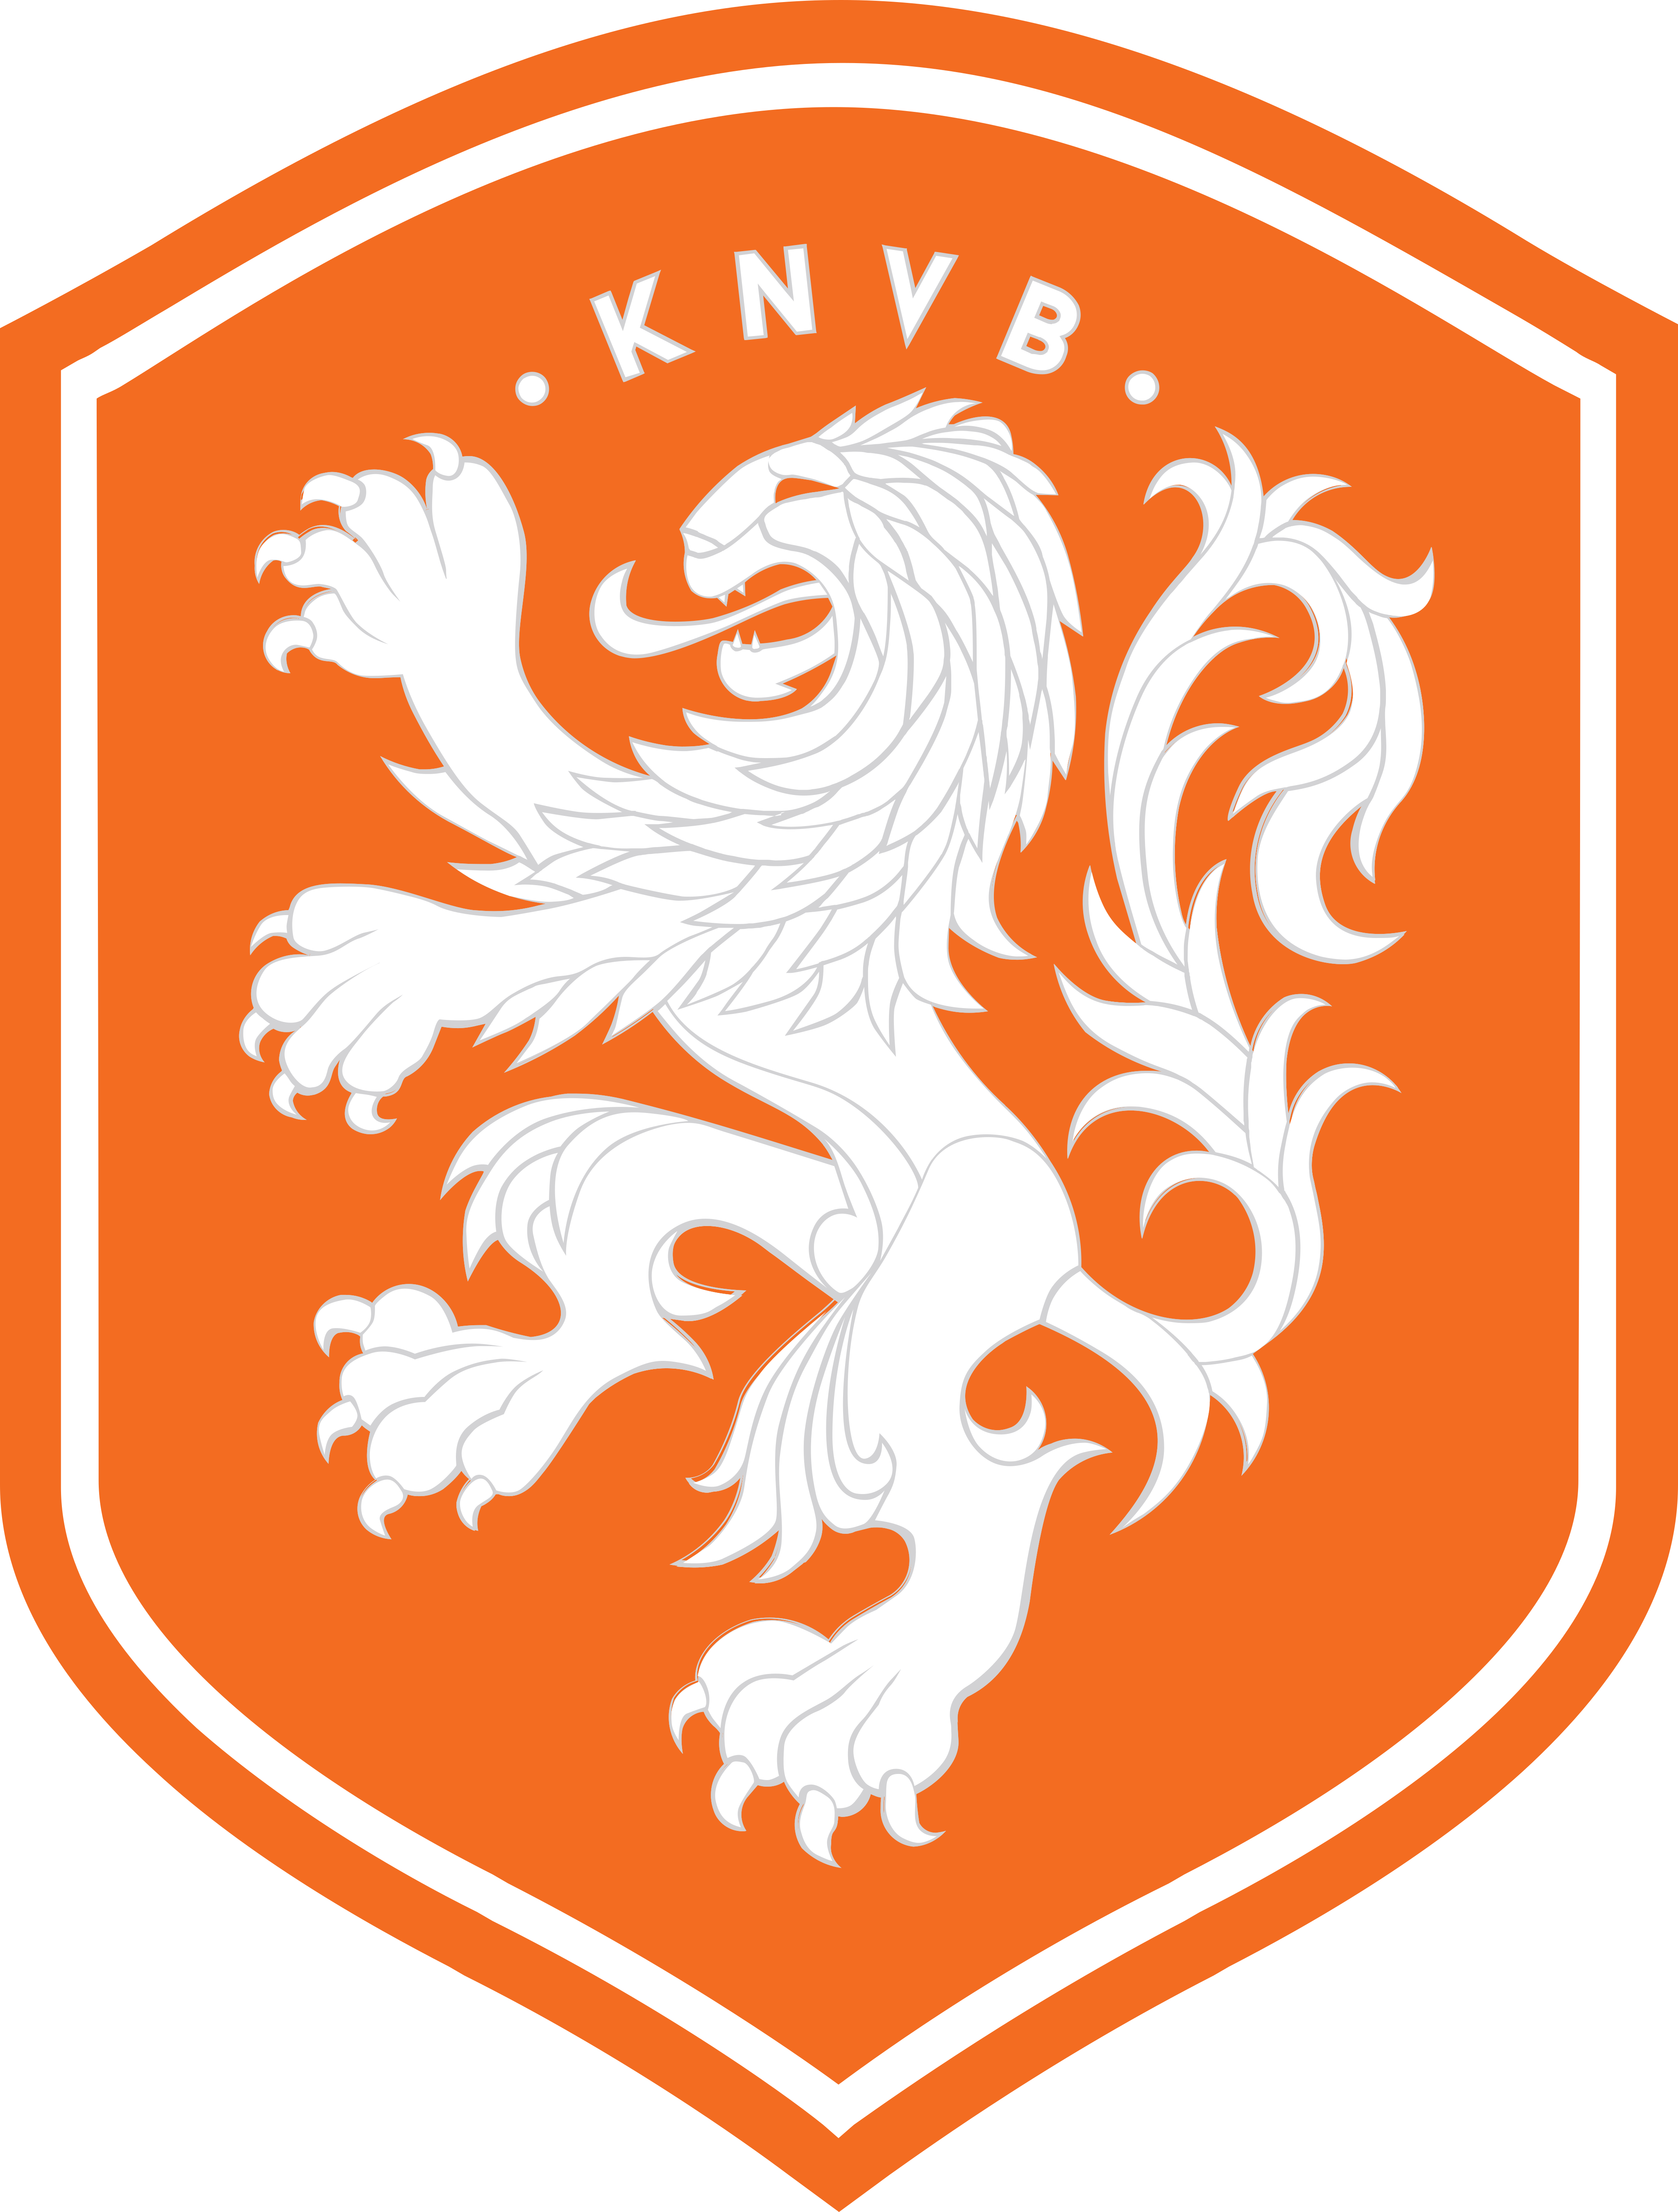 holanda netherlands football team logo - KNVB - Netherlands National Football Team Logo